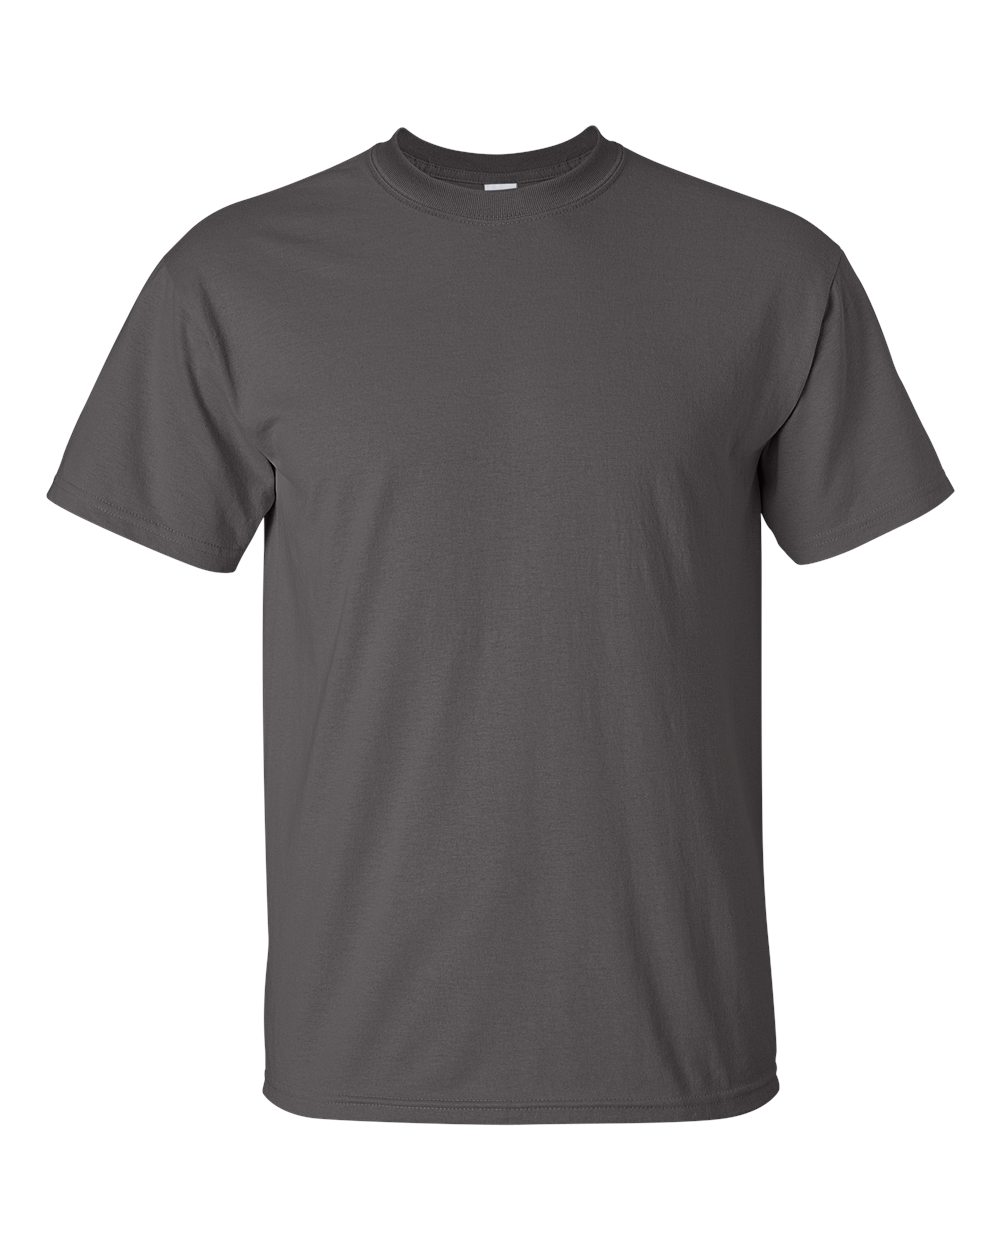 Download Blank Dark Grey T-shirt - Basic tees shop